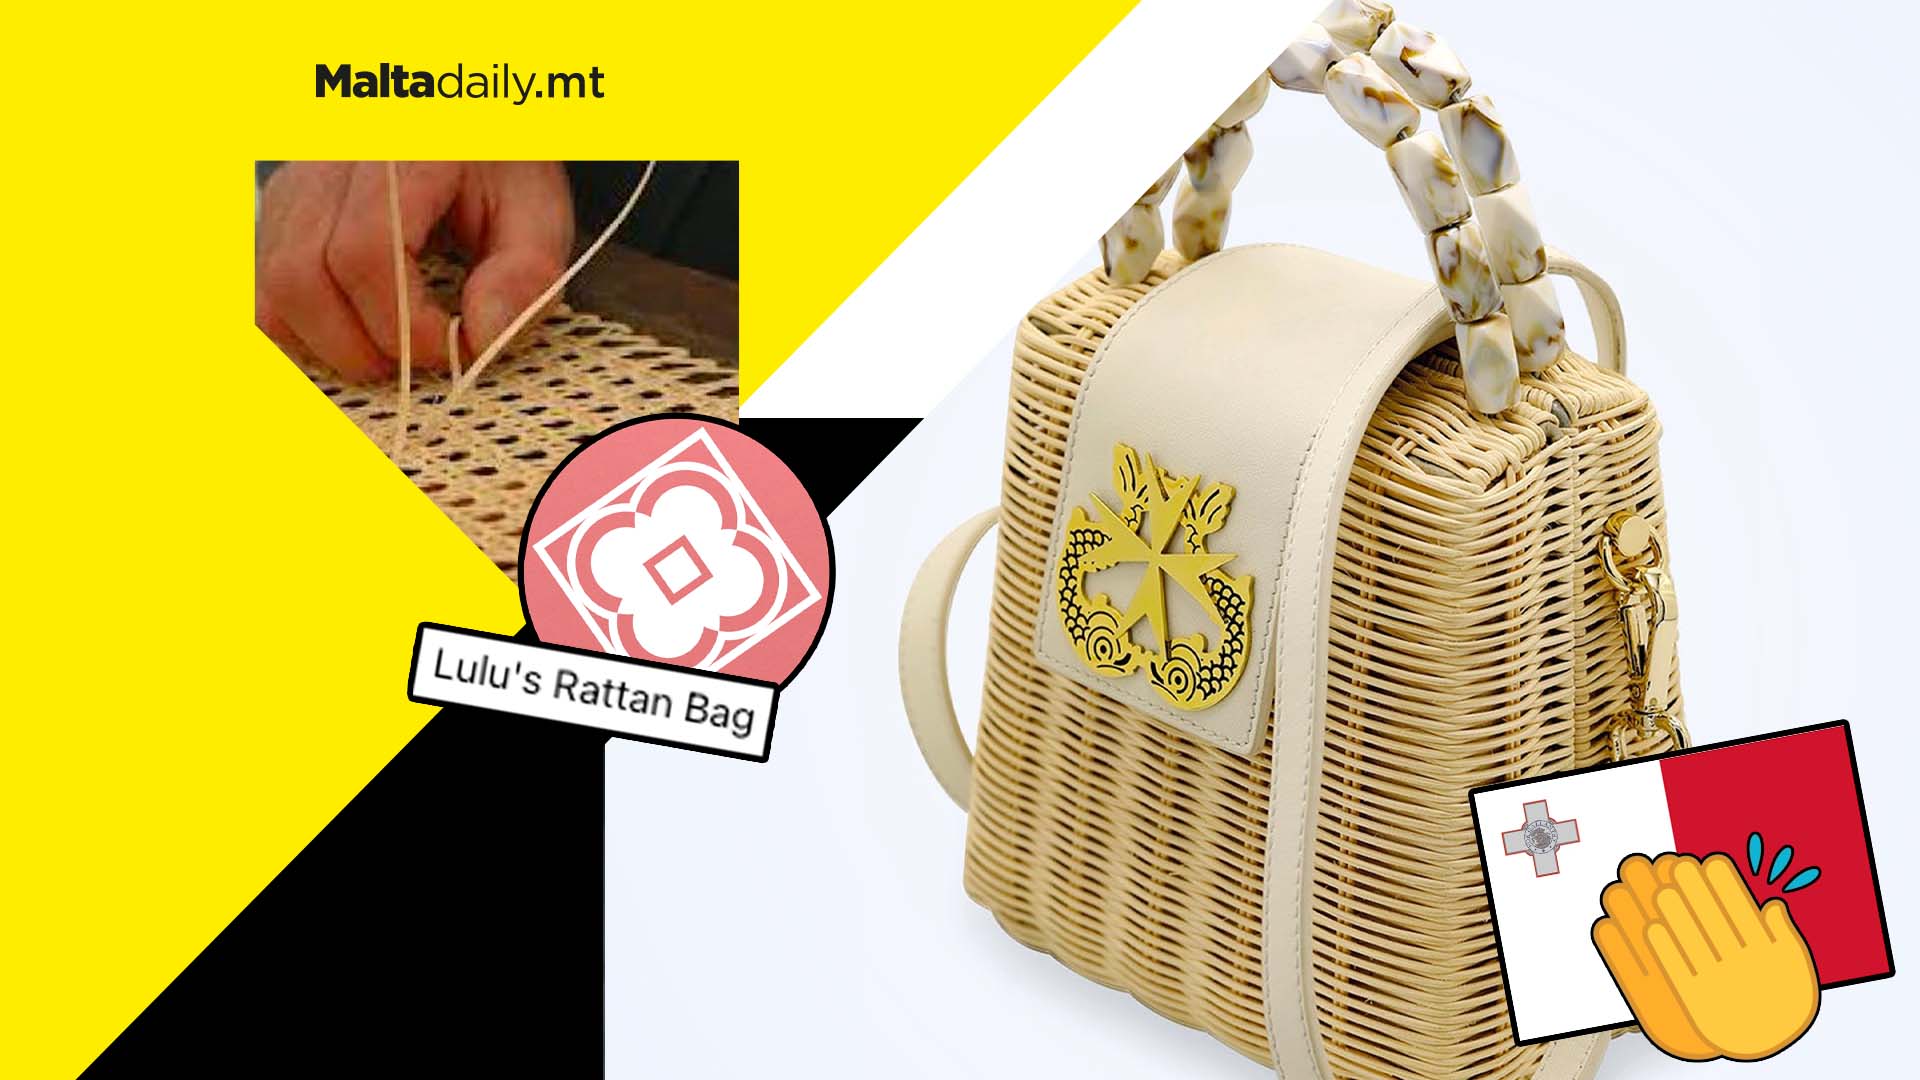 Carisma bring back Maltese heritage in their new bag design